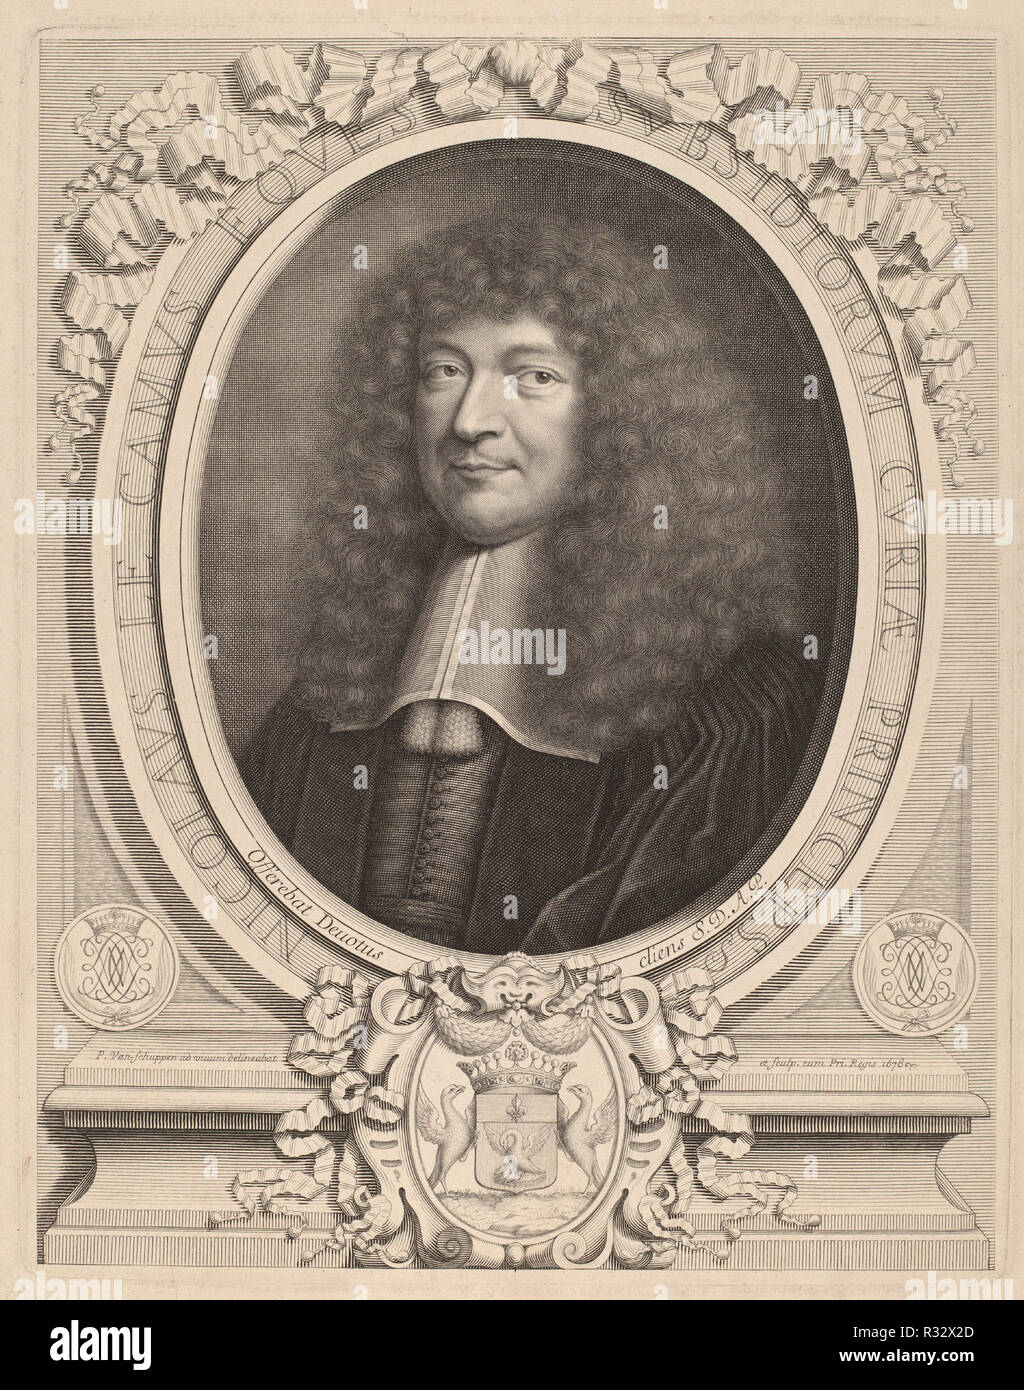 Nicolas Le Camus. Dated: 1678. Medium: engraving. Museum: National Gallery of Art, Washington DC. Author: Peter Ludwig van Schuppen after Pieter van Mol. Stock Photo